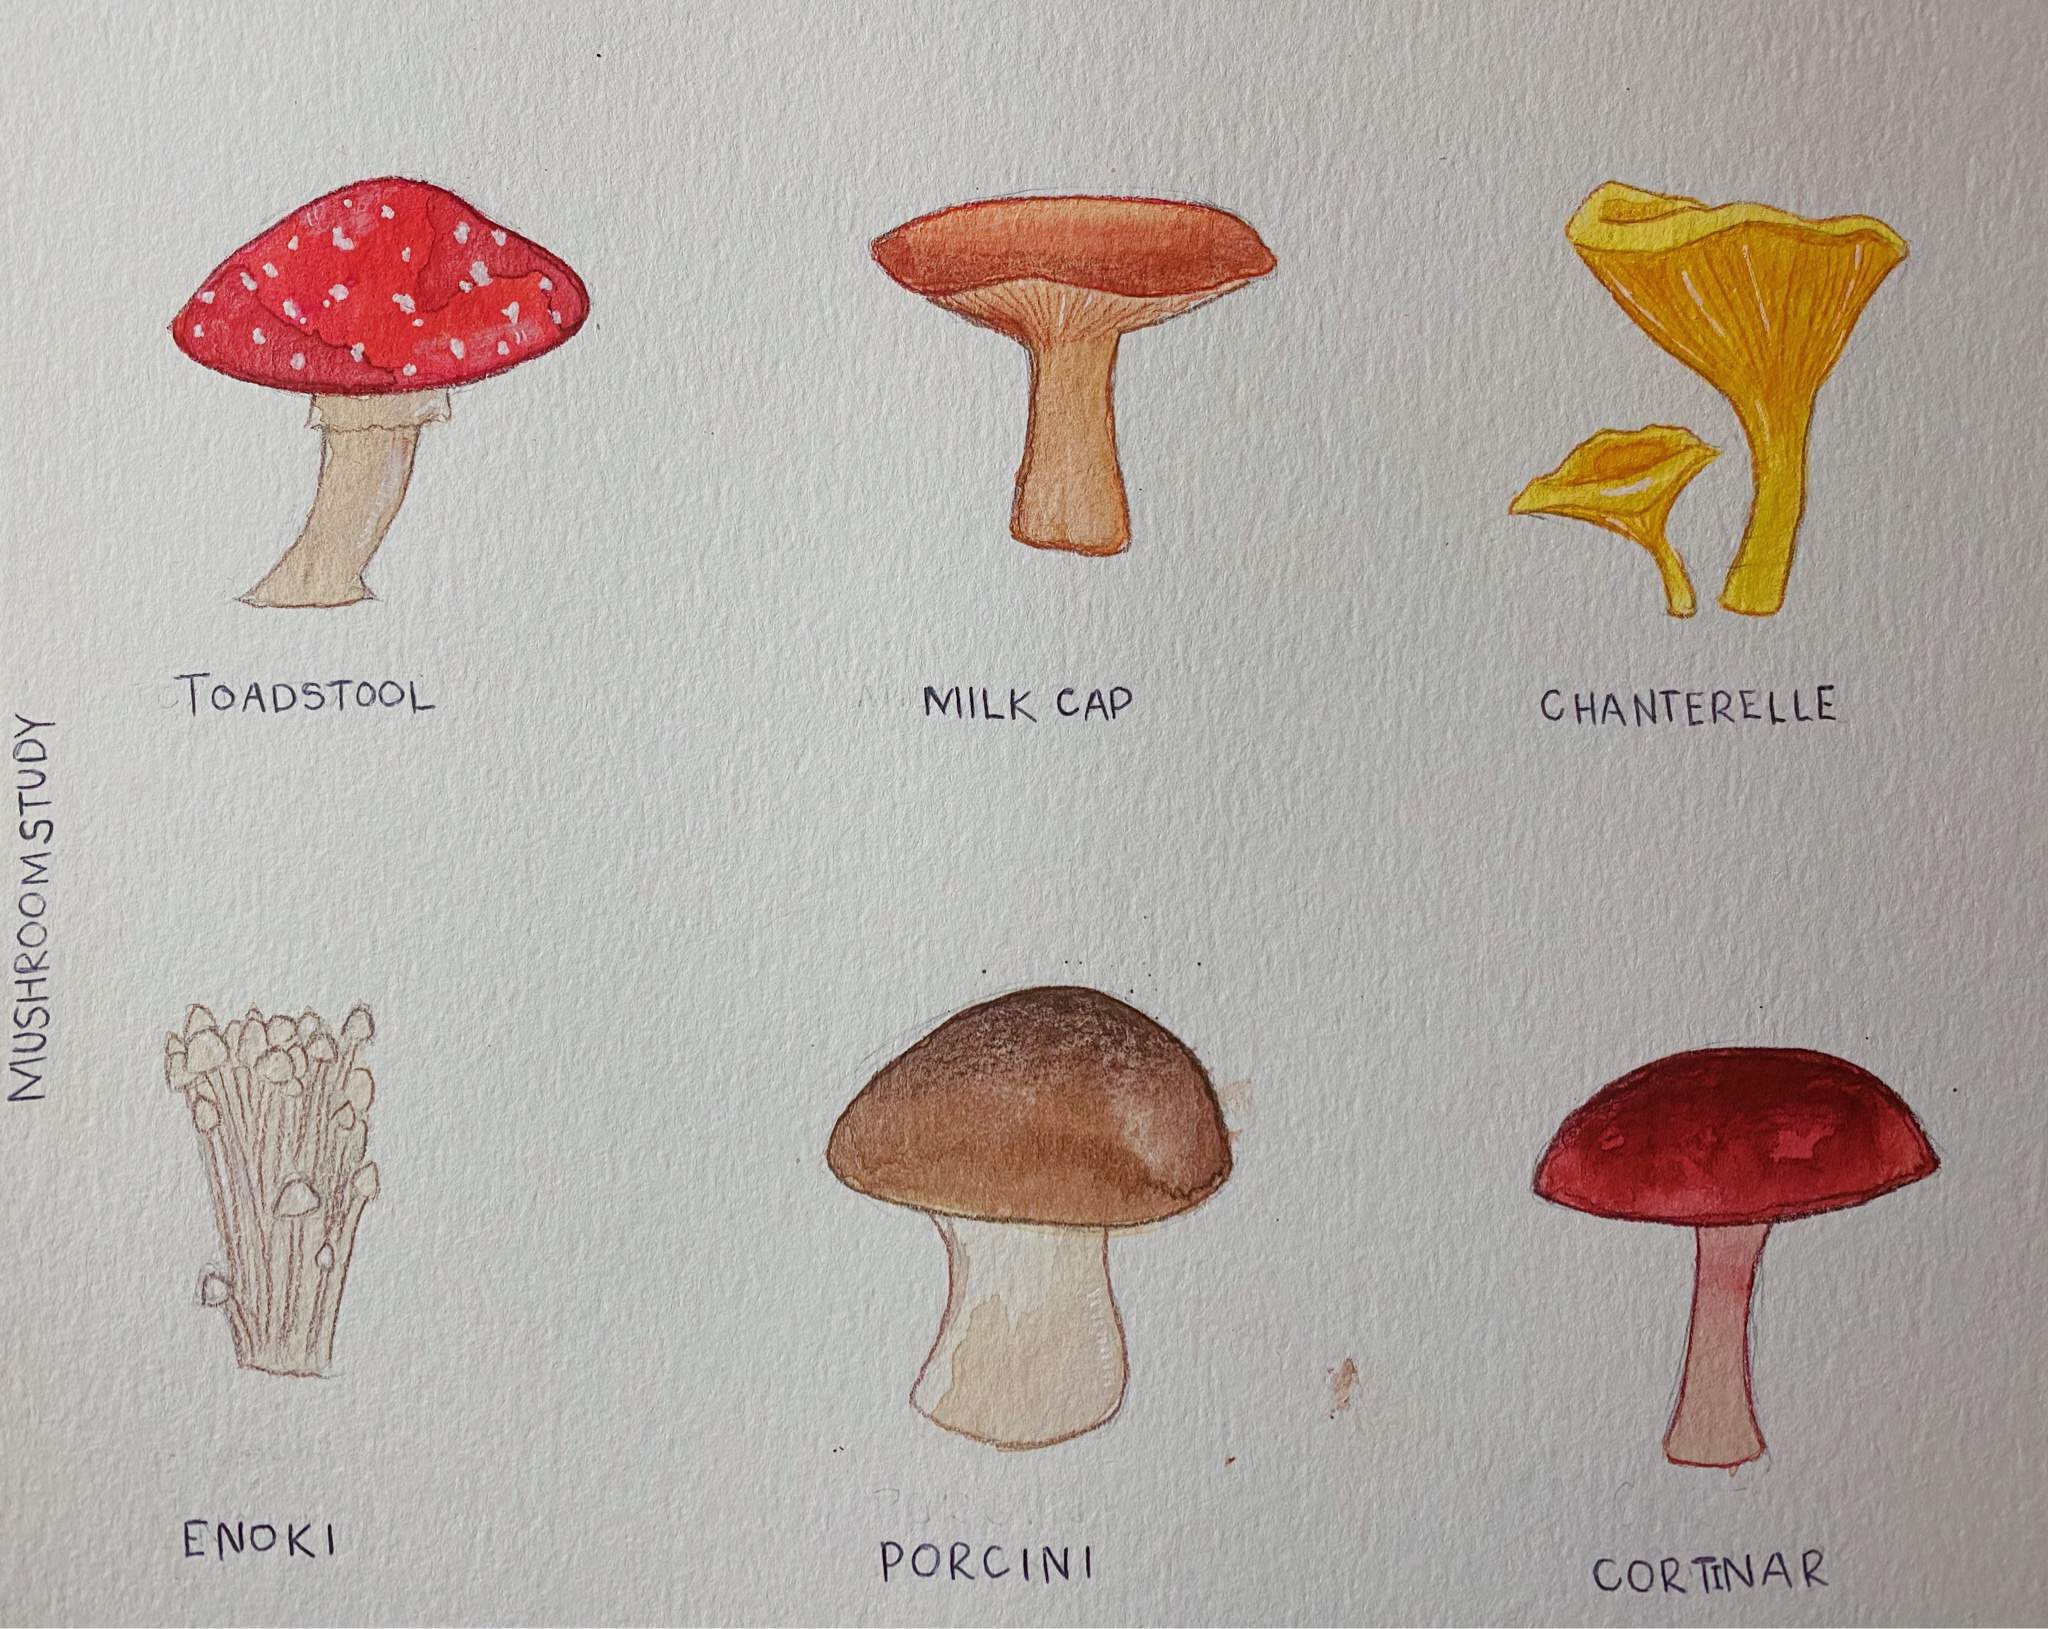 mushroom body visual cues